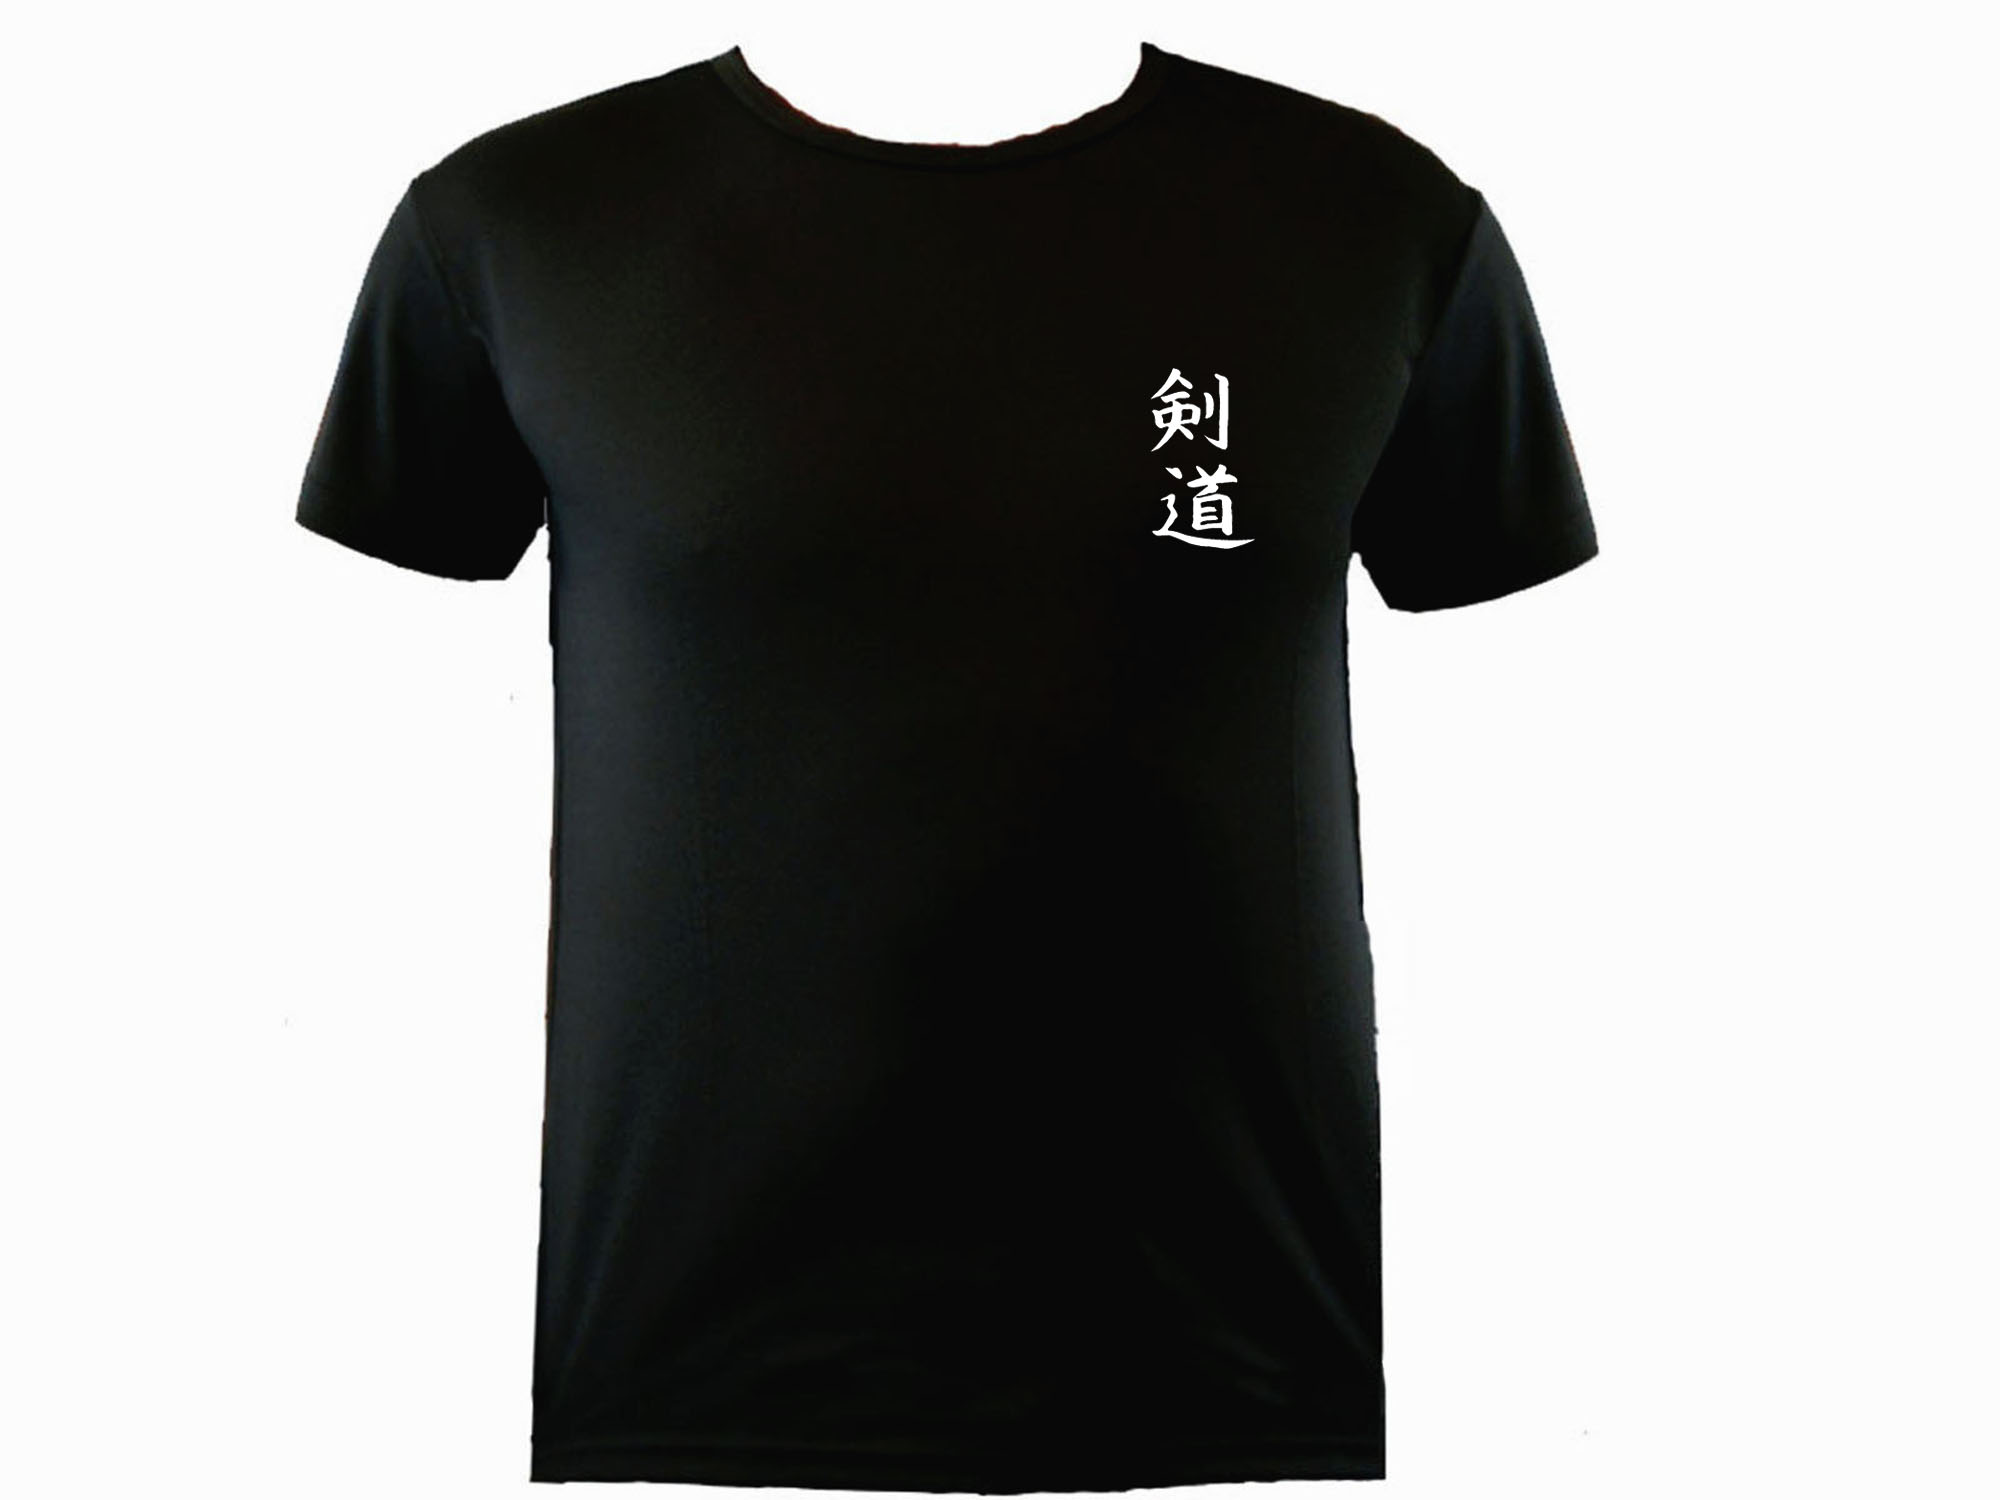 Kendo Japanese martial arts sweat proof fabric t-shirt